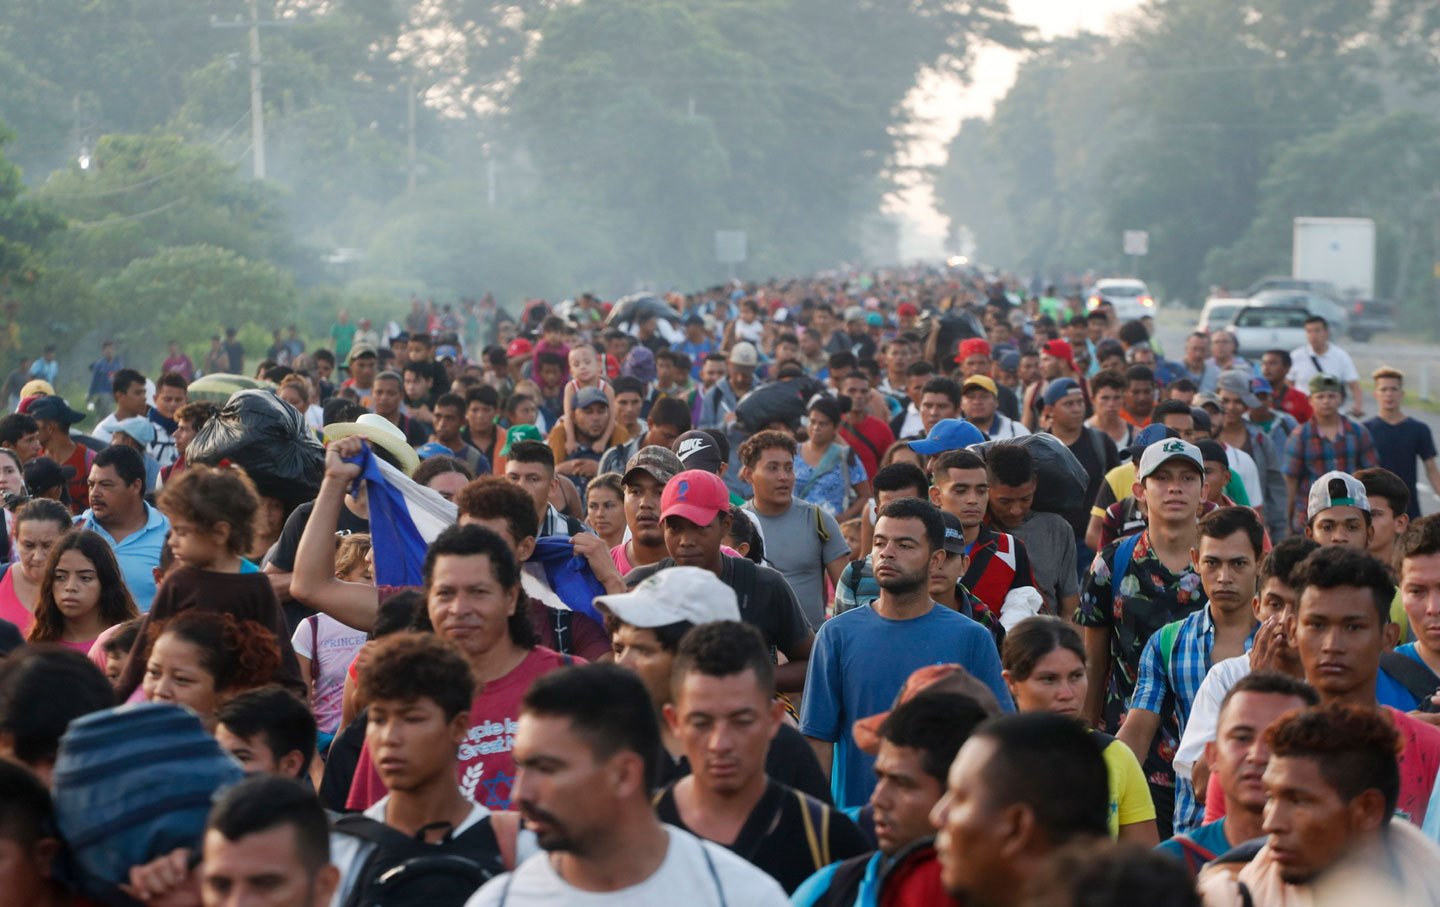 Central Americans seeking asylum status